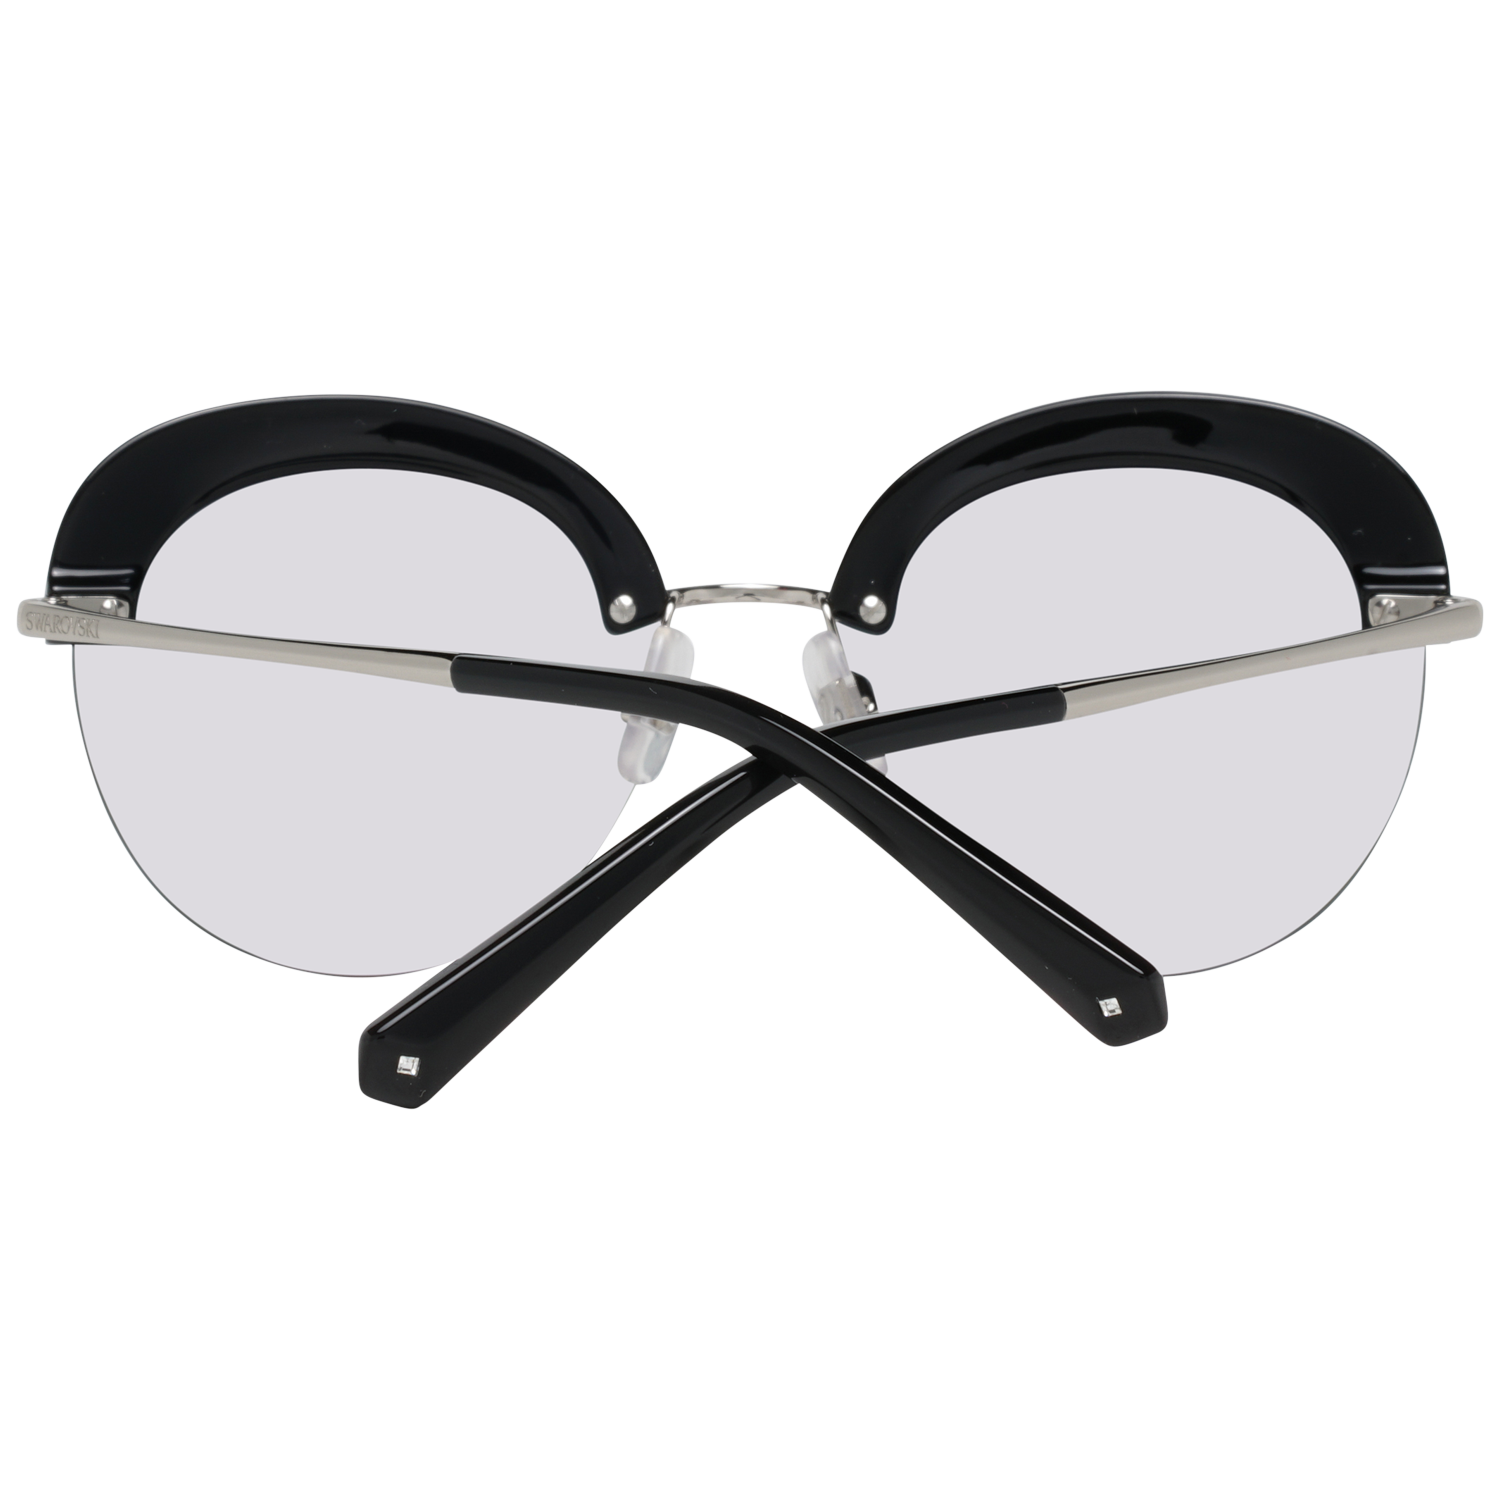 Swarovski Sunglasses Swarovski Sunglasses SK0256 16Z 56 Eyeglasses Eyewear UK USA Australia 